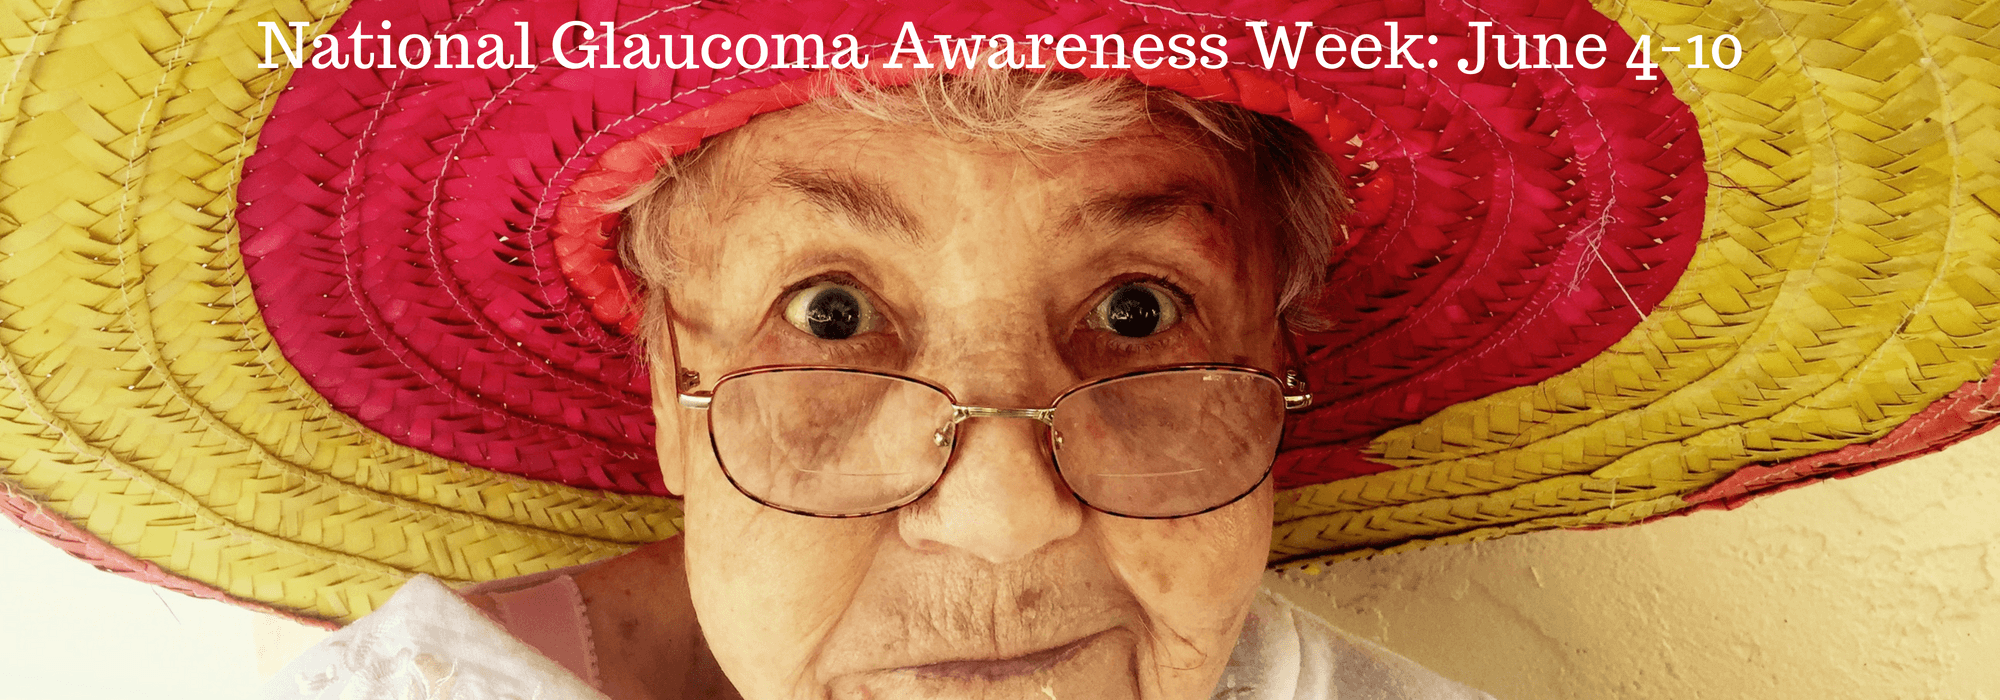 National Glaucoma Awareness Week: Dry Eye Focus